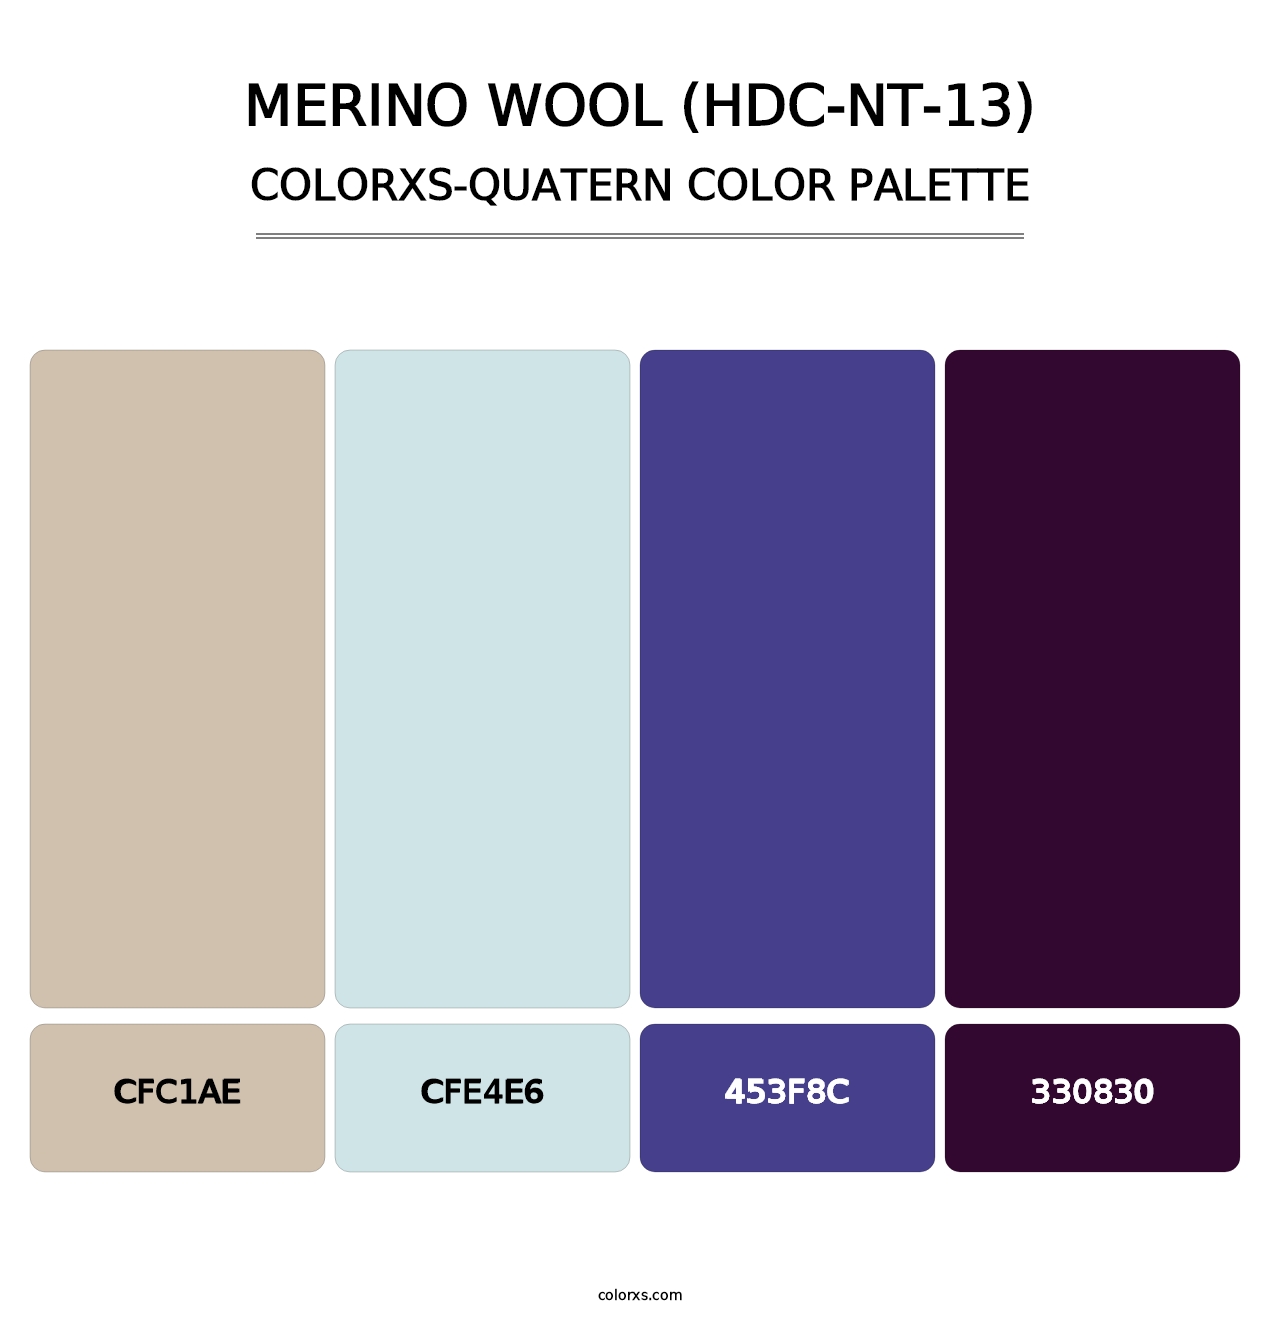 Merino Wool (HDC-NT-13) - Colorxs Quatern Palette